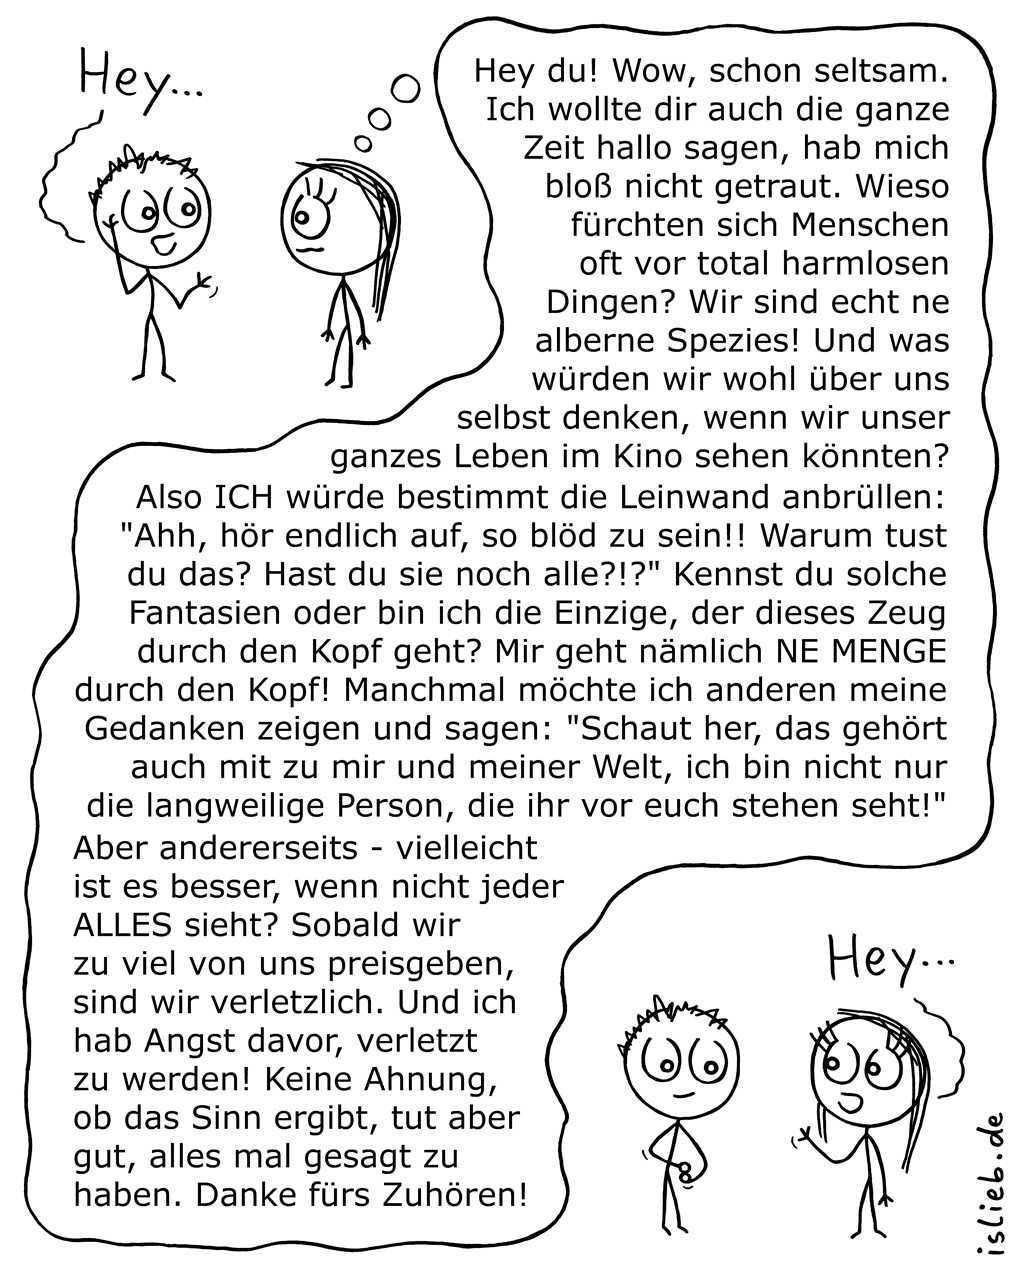 Hey | Gedanken-Comic | is lieb?